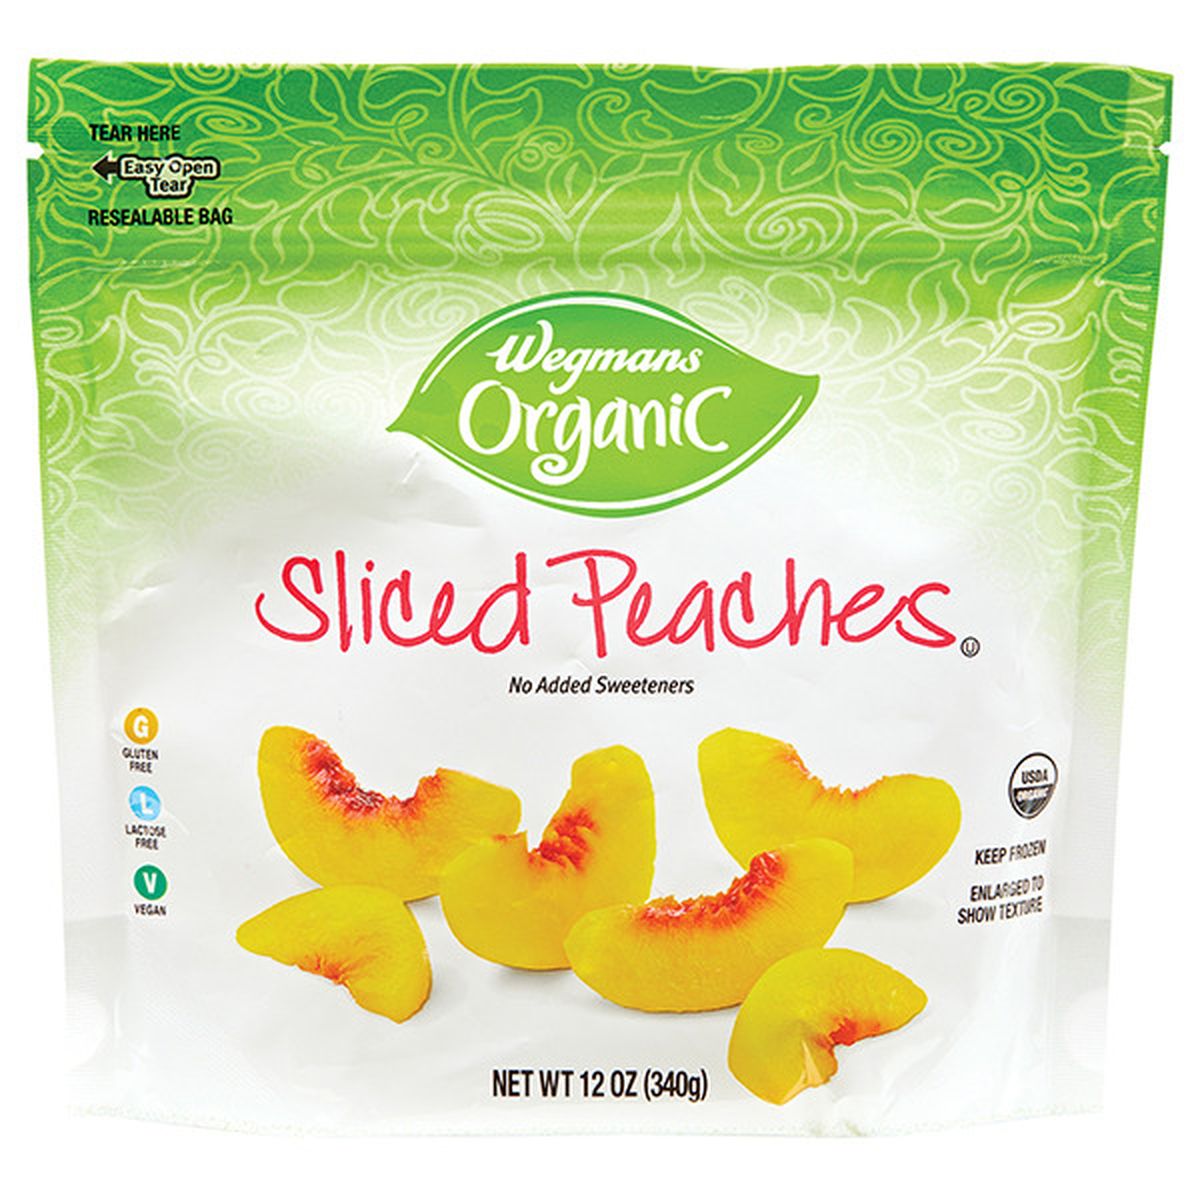 Calories in Wegmans Organic Frozen Sliced Peaches